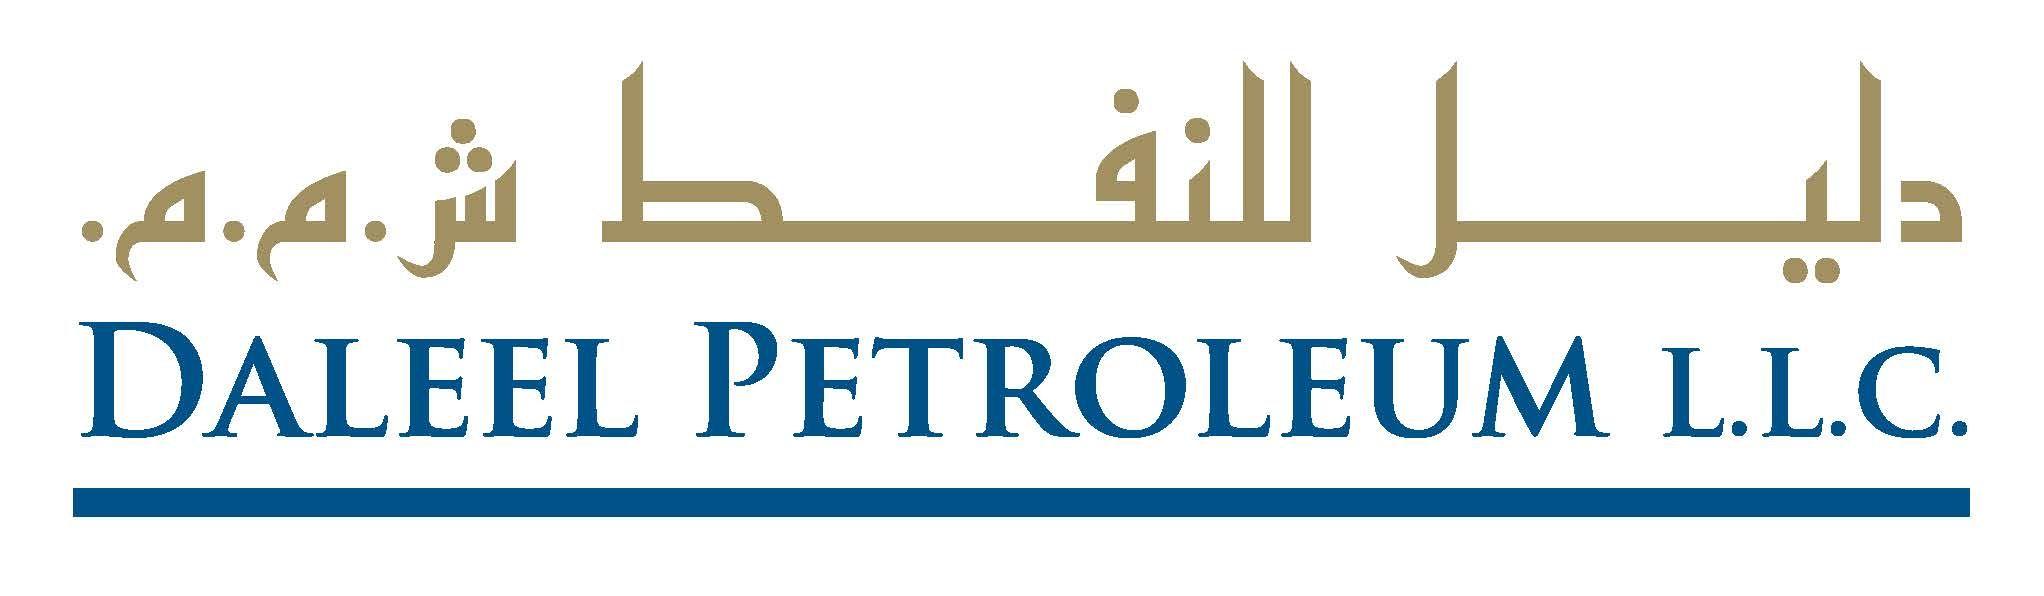 China National Petroleum Logo - DALEEL PETROLEUM L.L.C